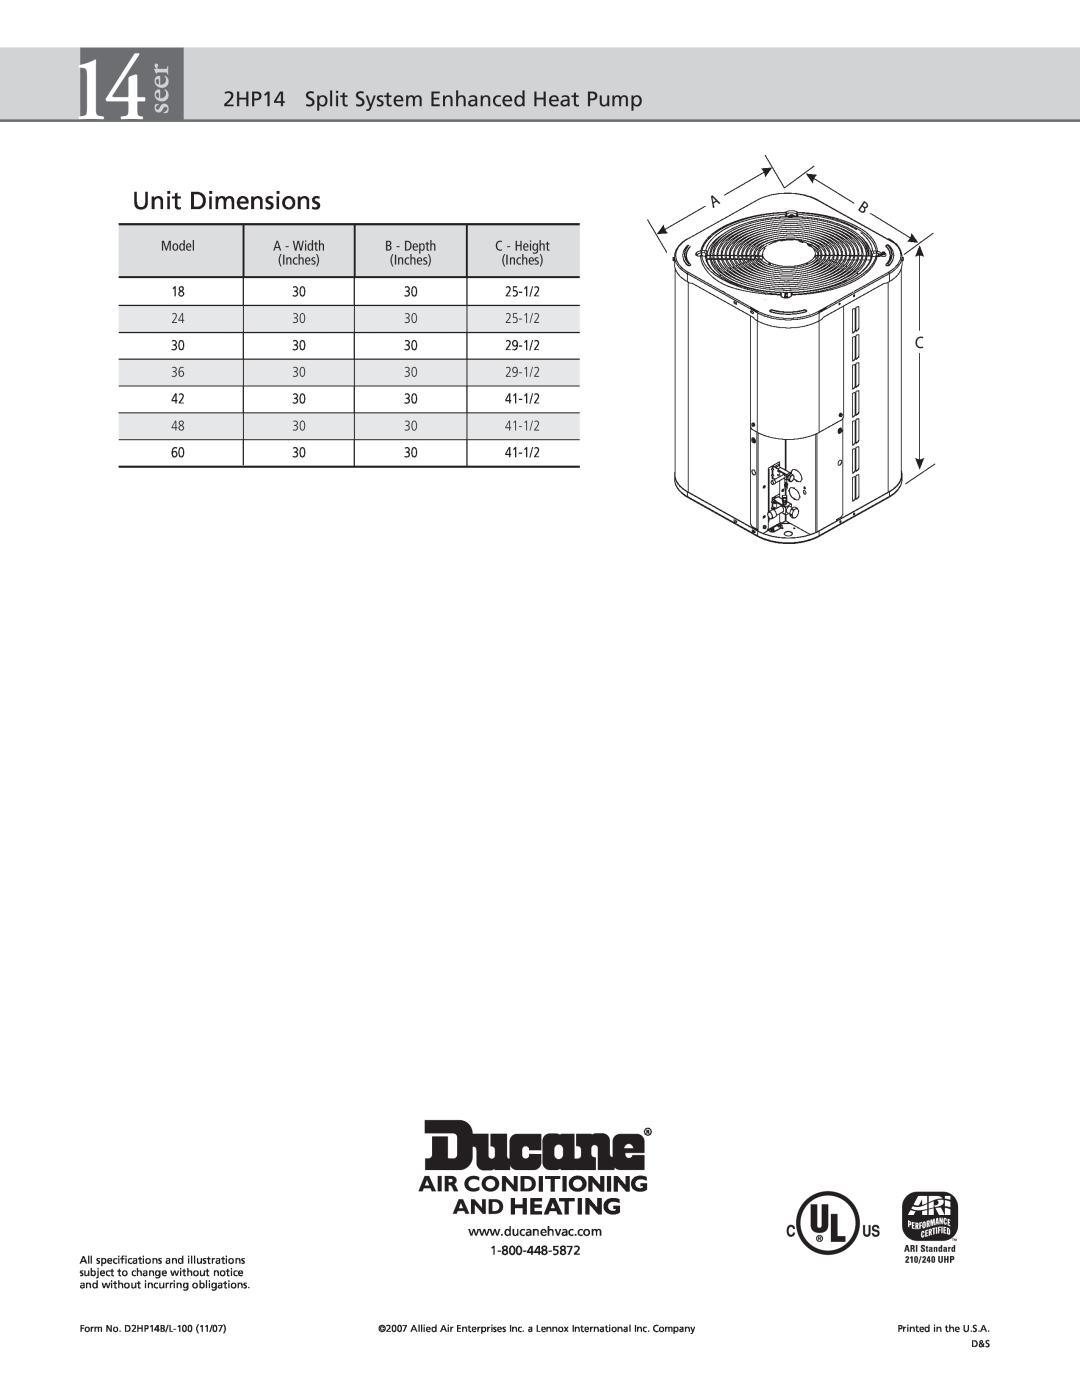 Ducane (HVAC) 2HP14 warranty Unit Dimensions, seer 